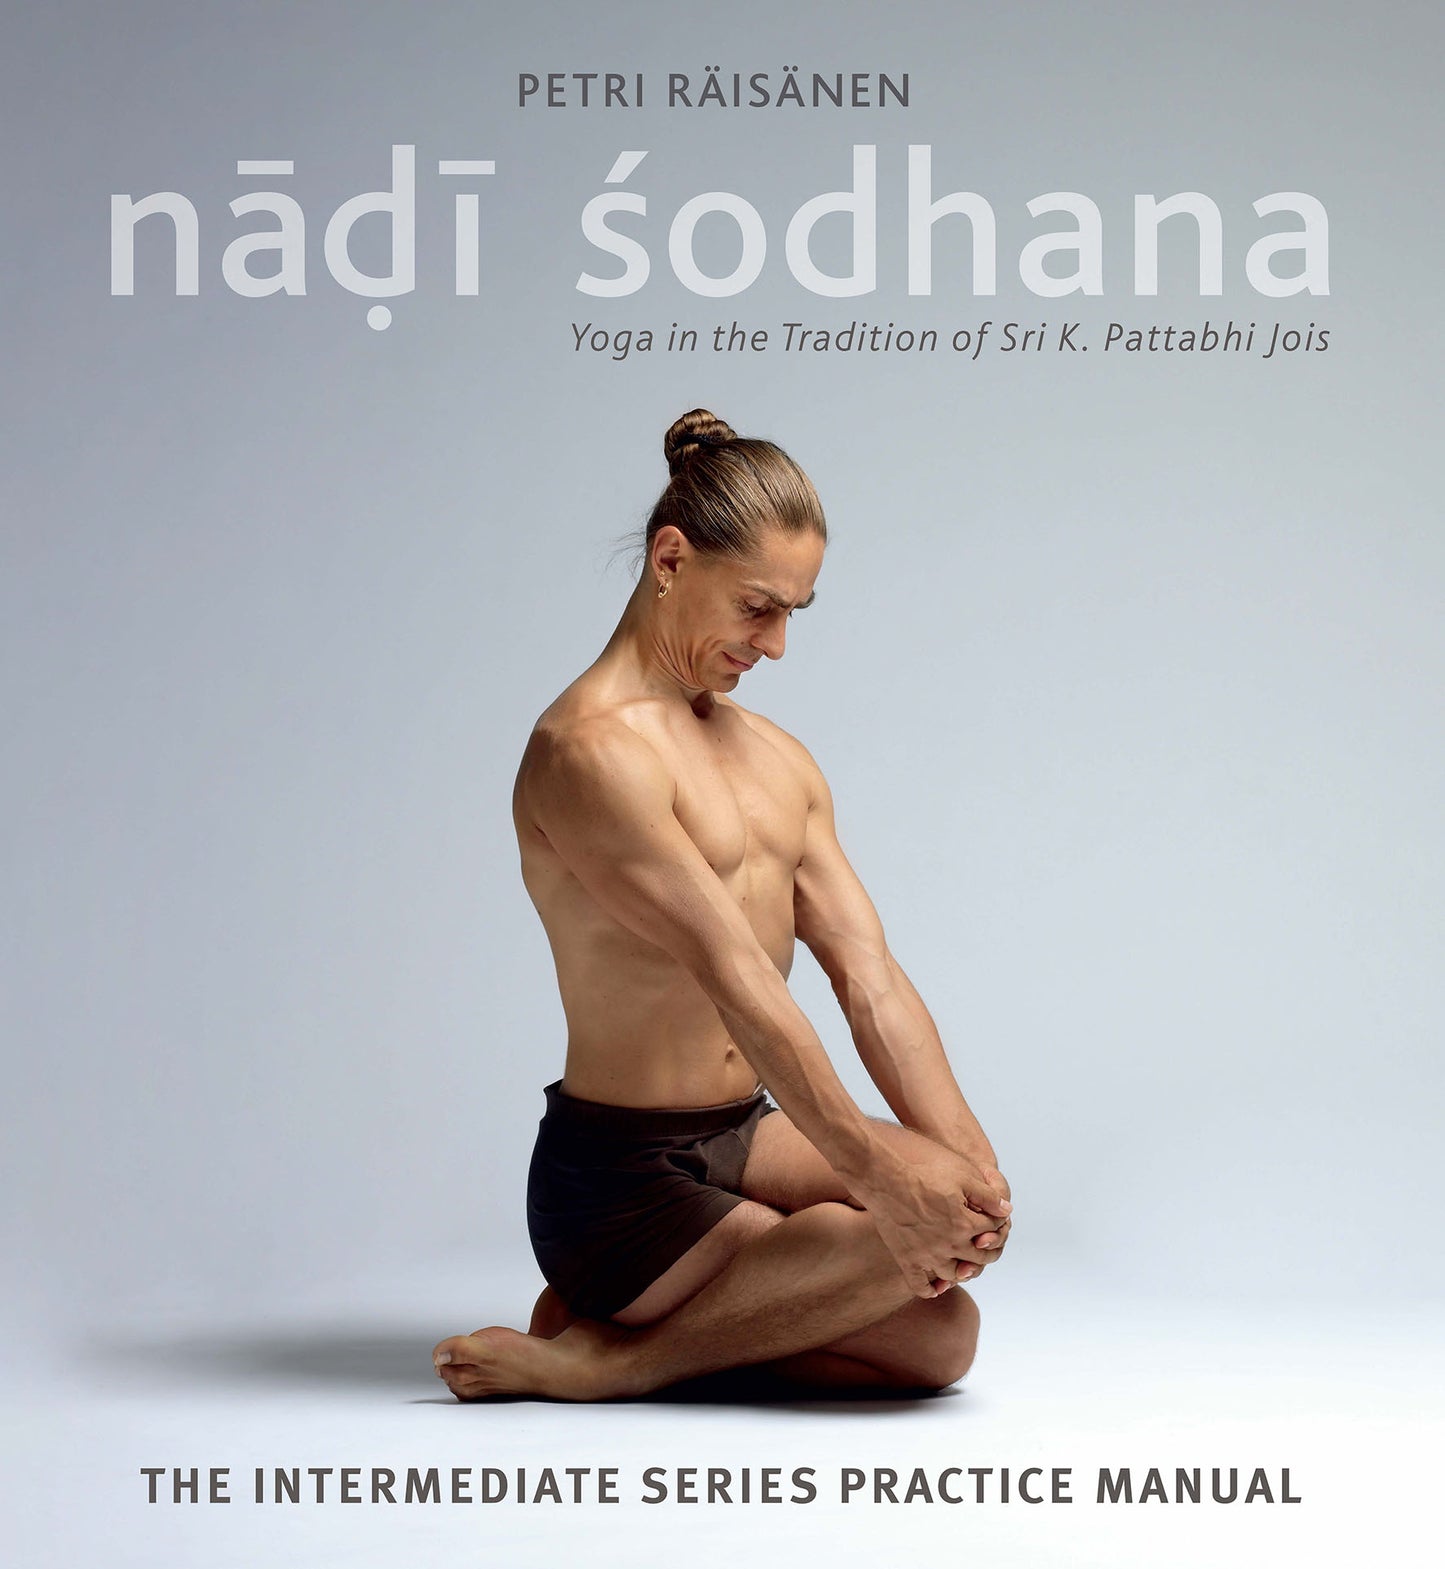 Nadi Sodhana: Yoga in the Tradition of Sri K. Pattabhi Jois